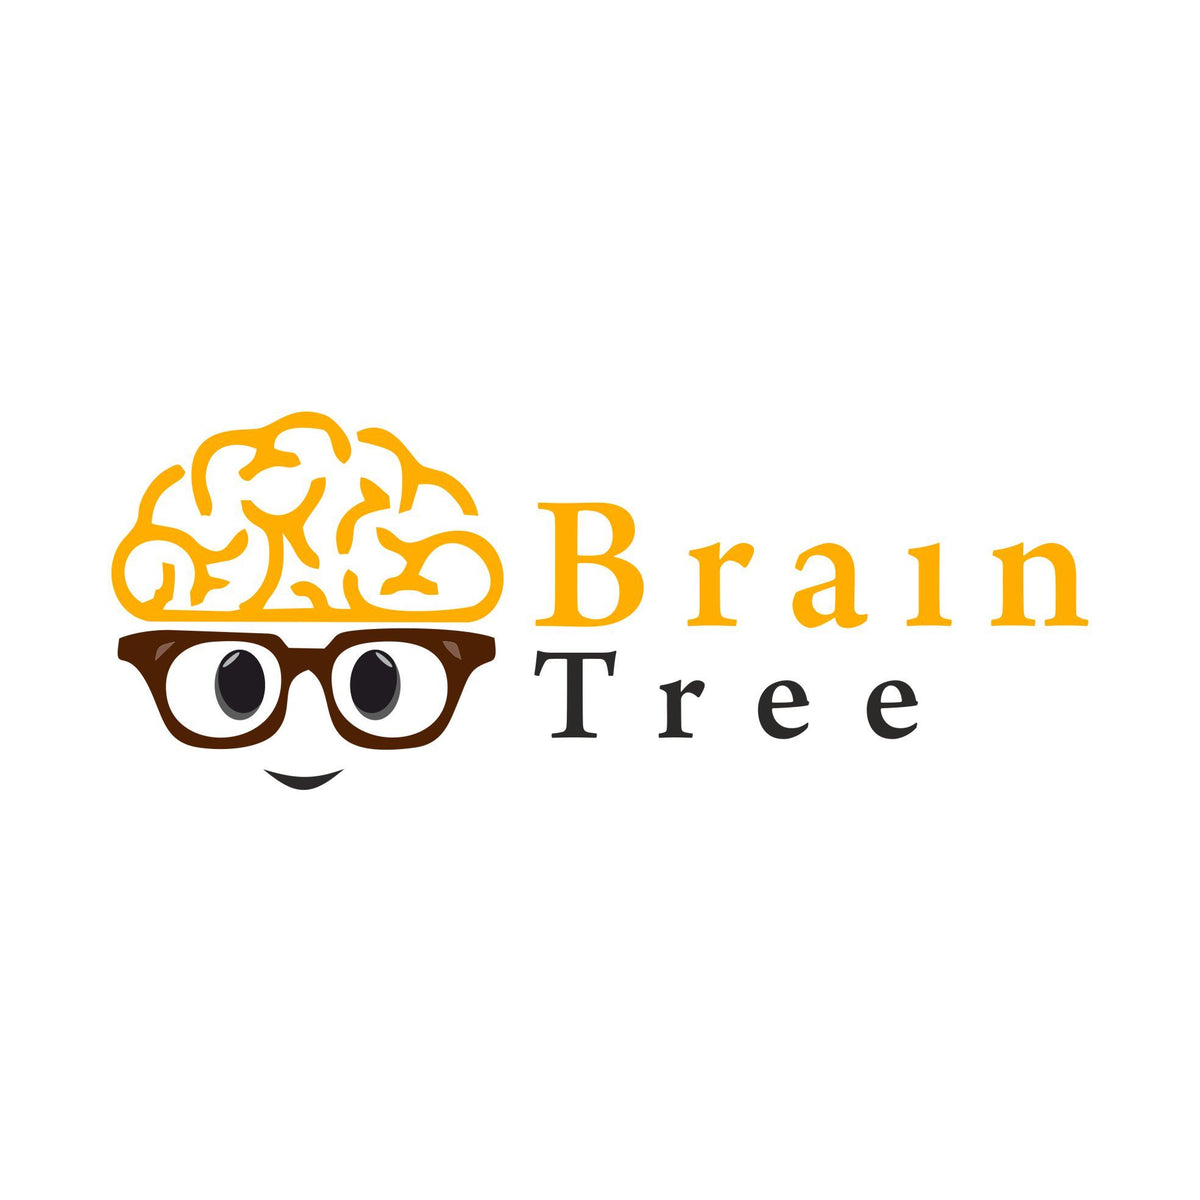 www.braintreegames.com